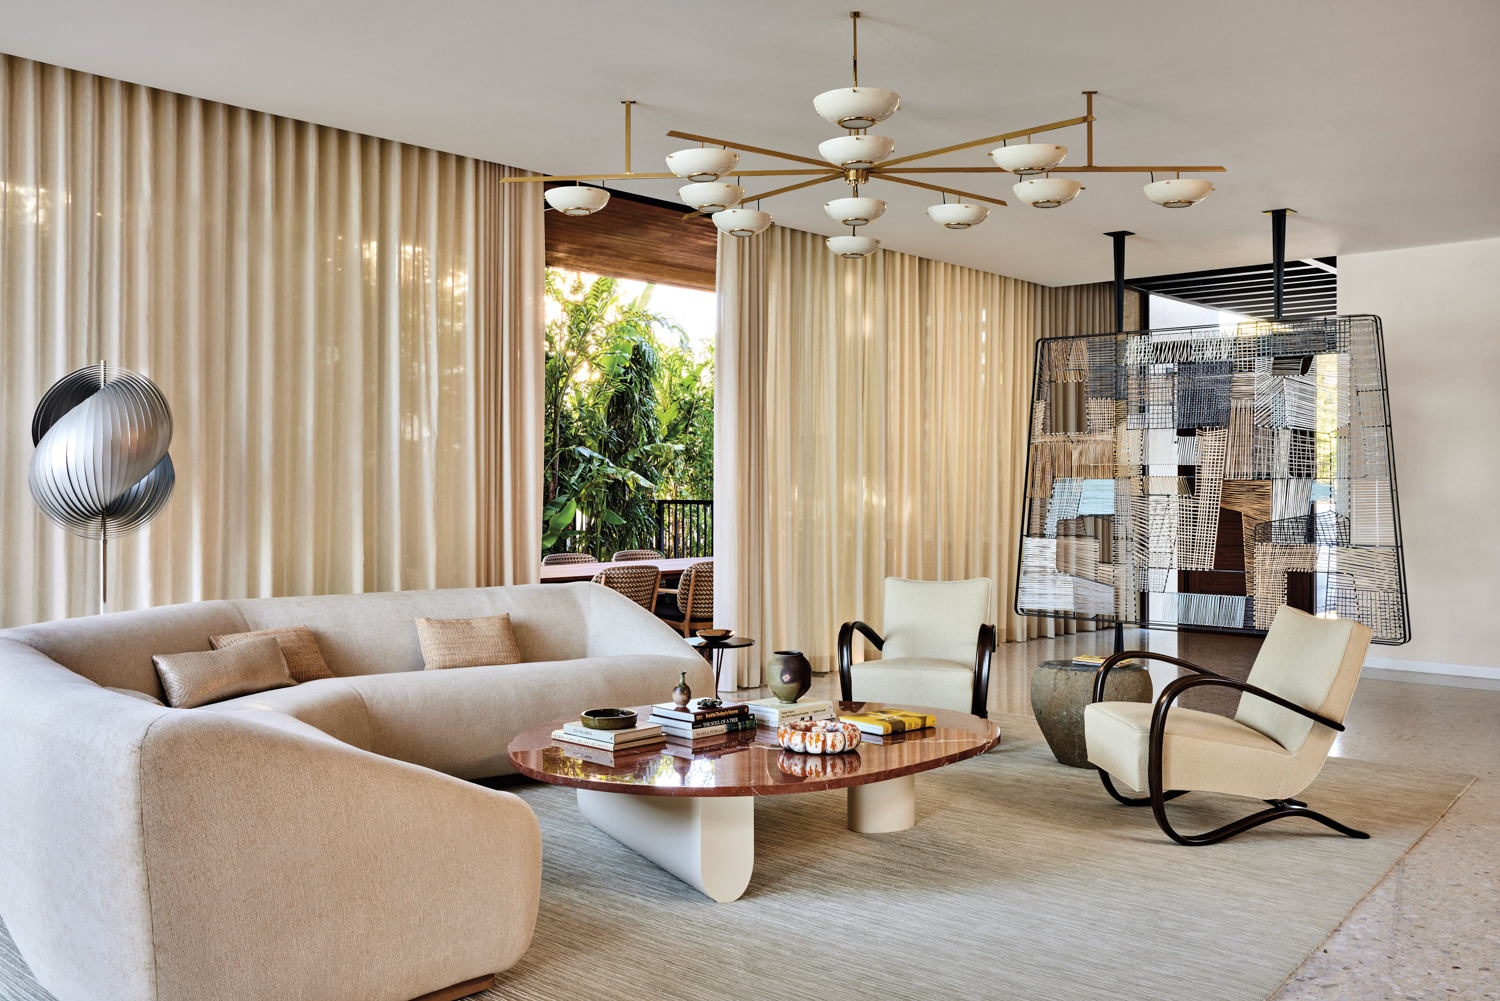 This Tropical-Modernist Beach Home Nods To Miami With Art Deco